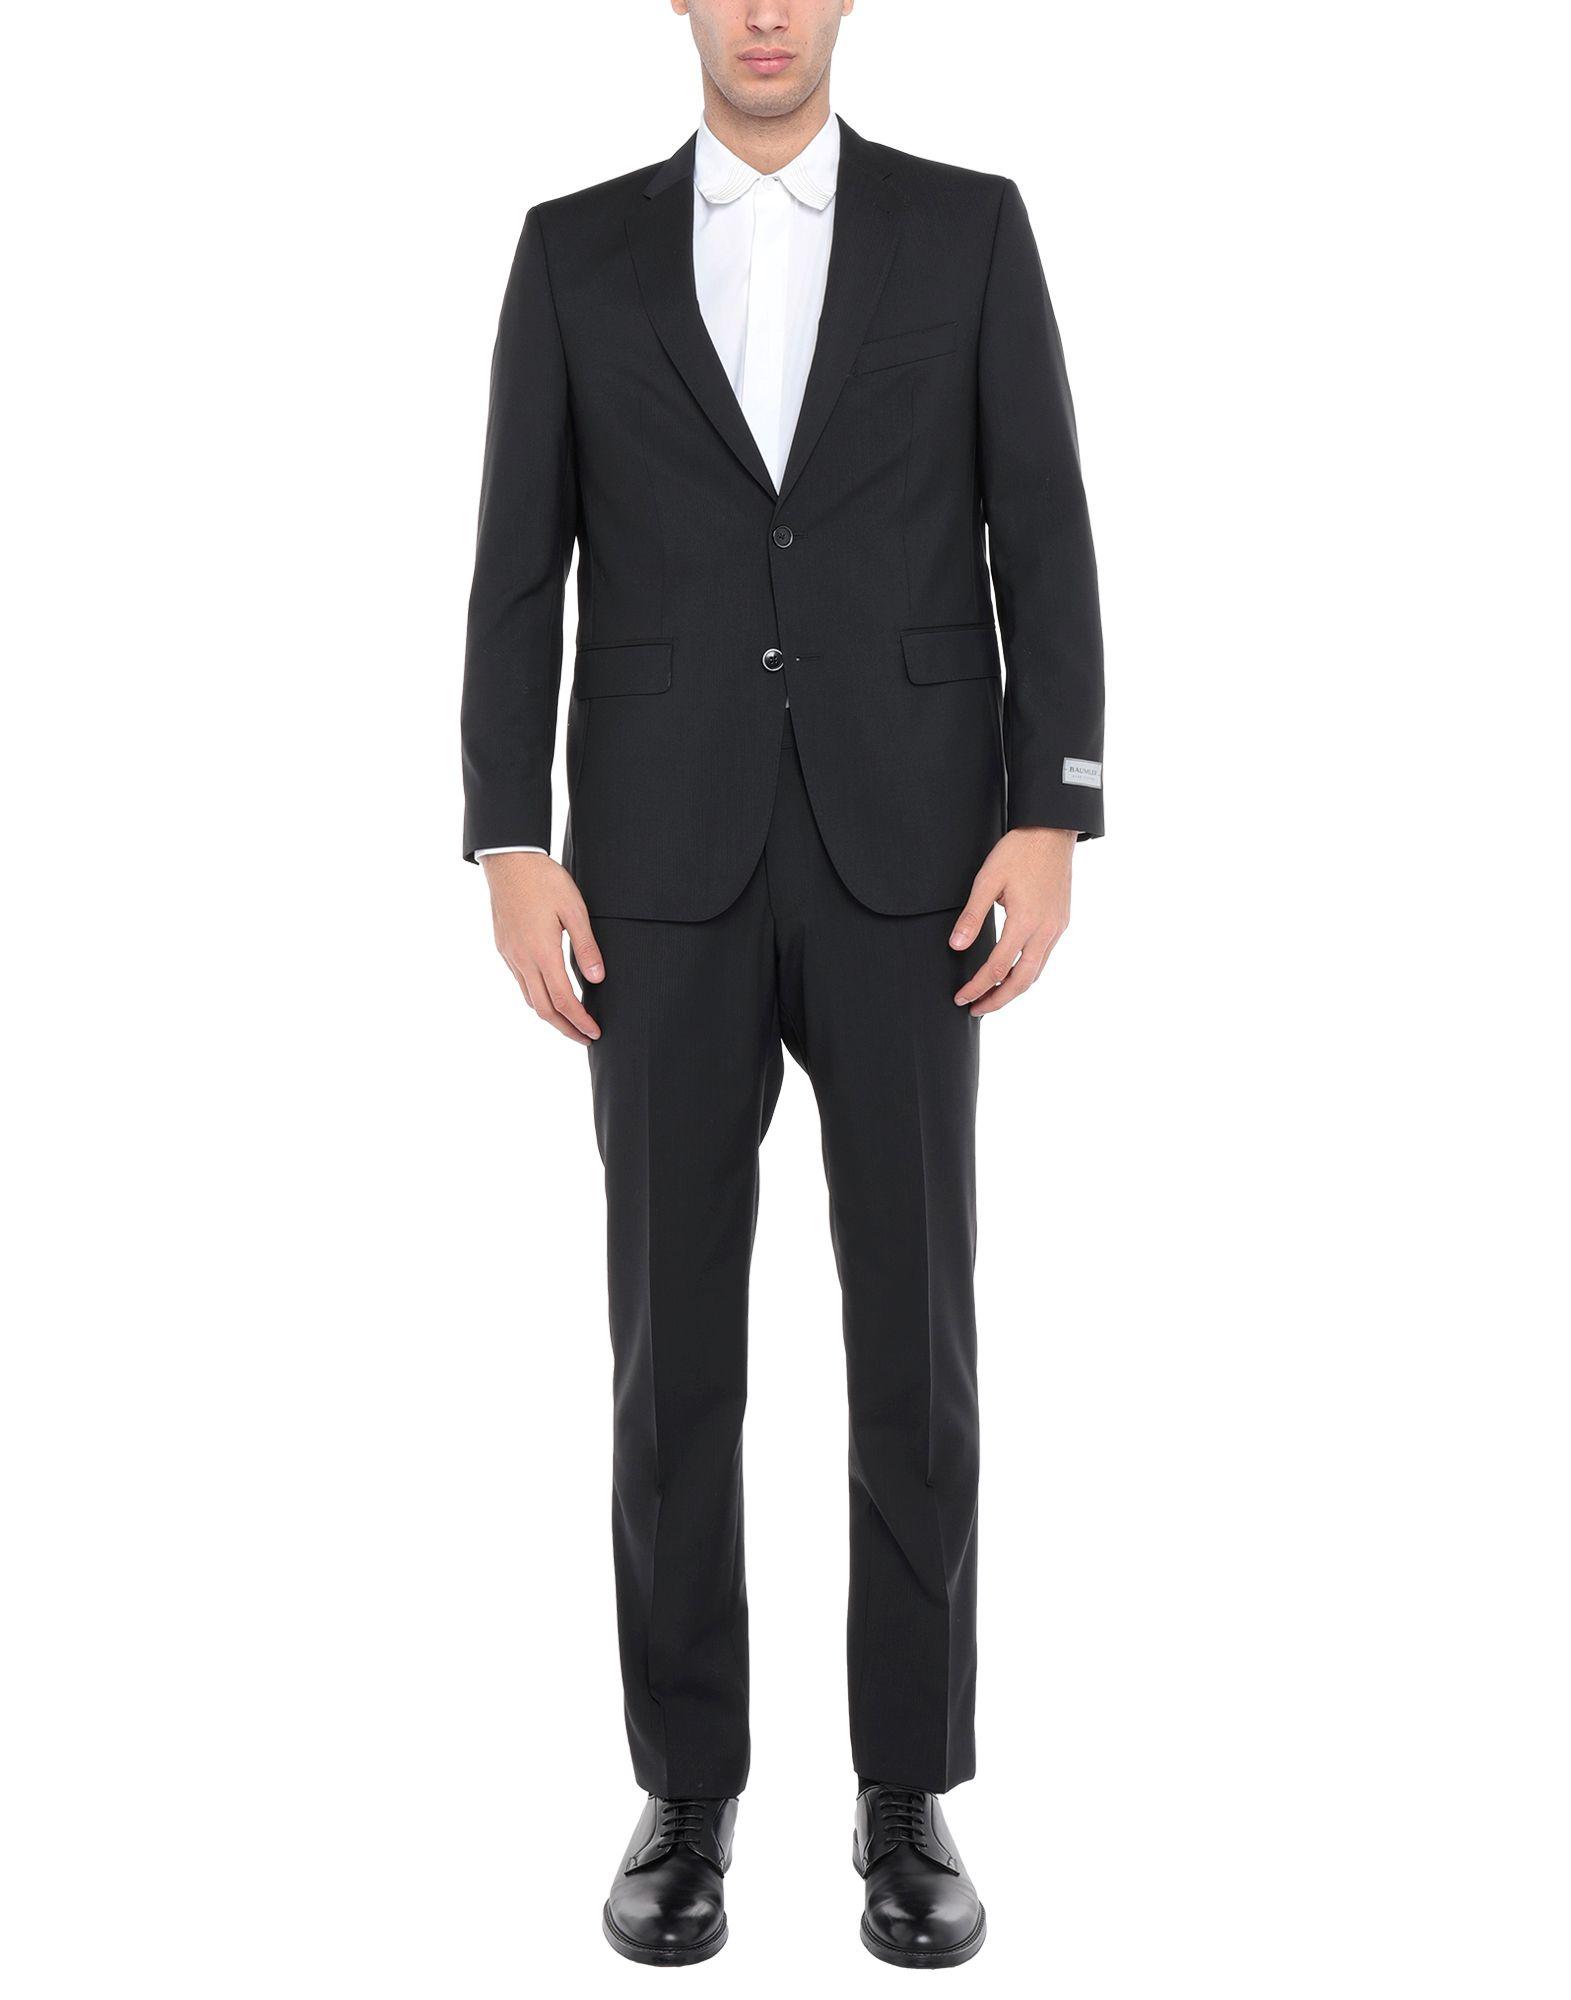 Bäumler Wool Suit in Black for Men - Lyst